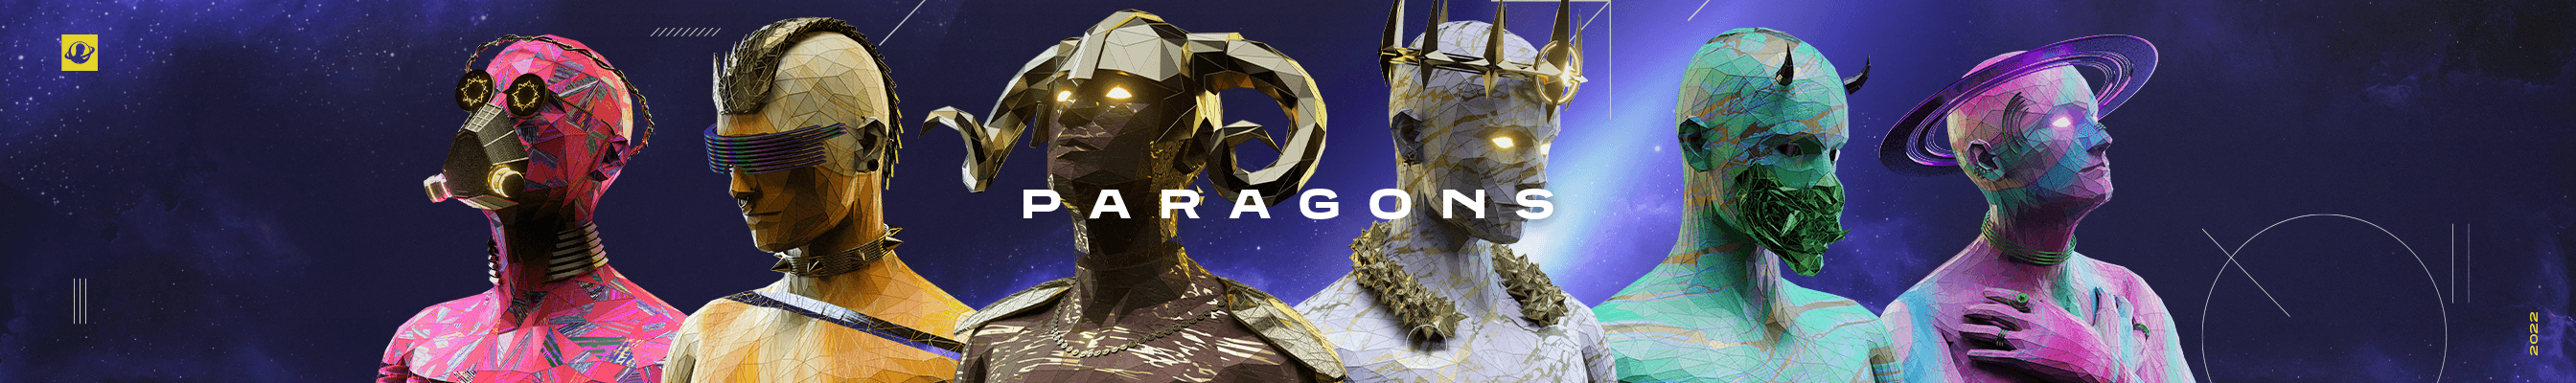 Paragons_Creator banner